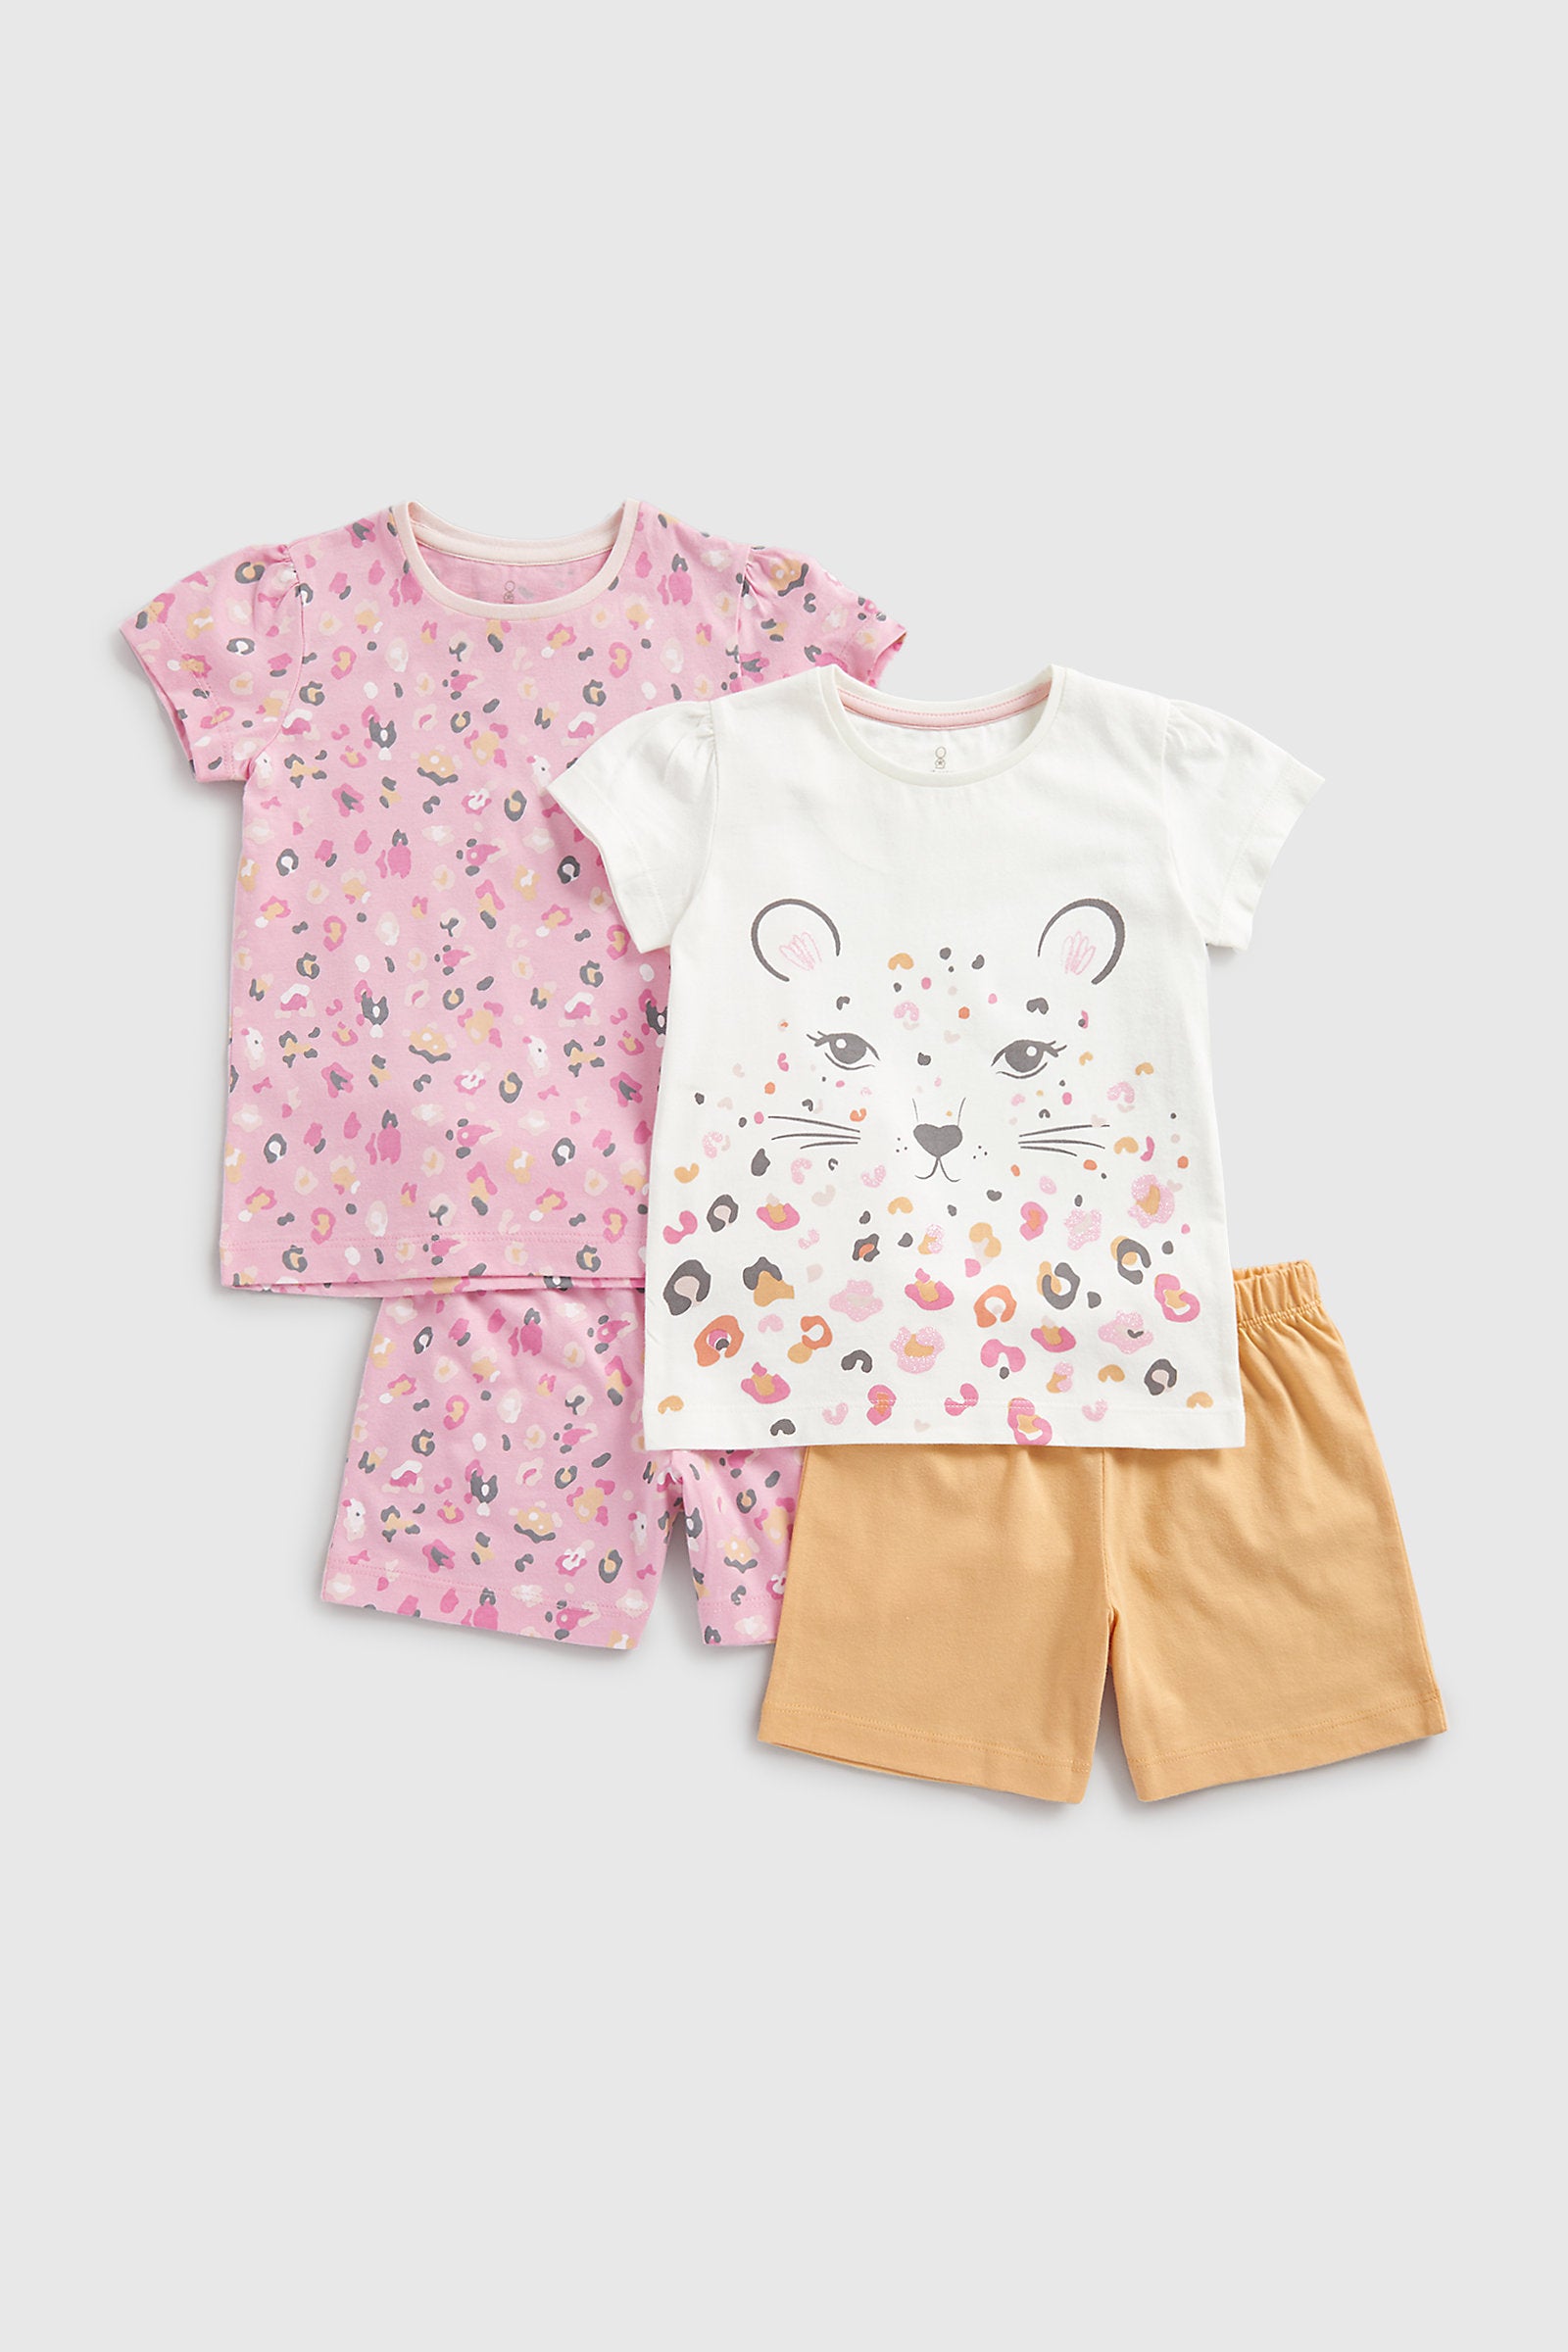 Mothercare Leopard Shortie Pyjamas - 2 Pack